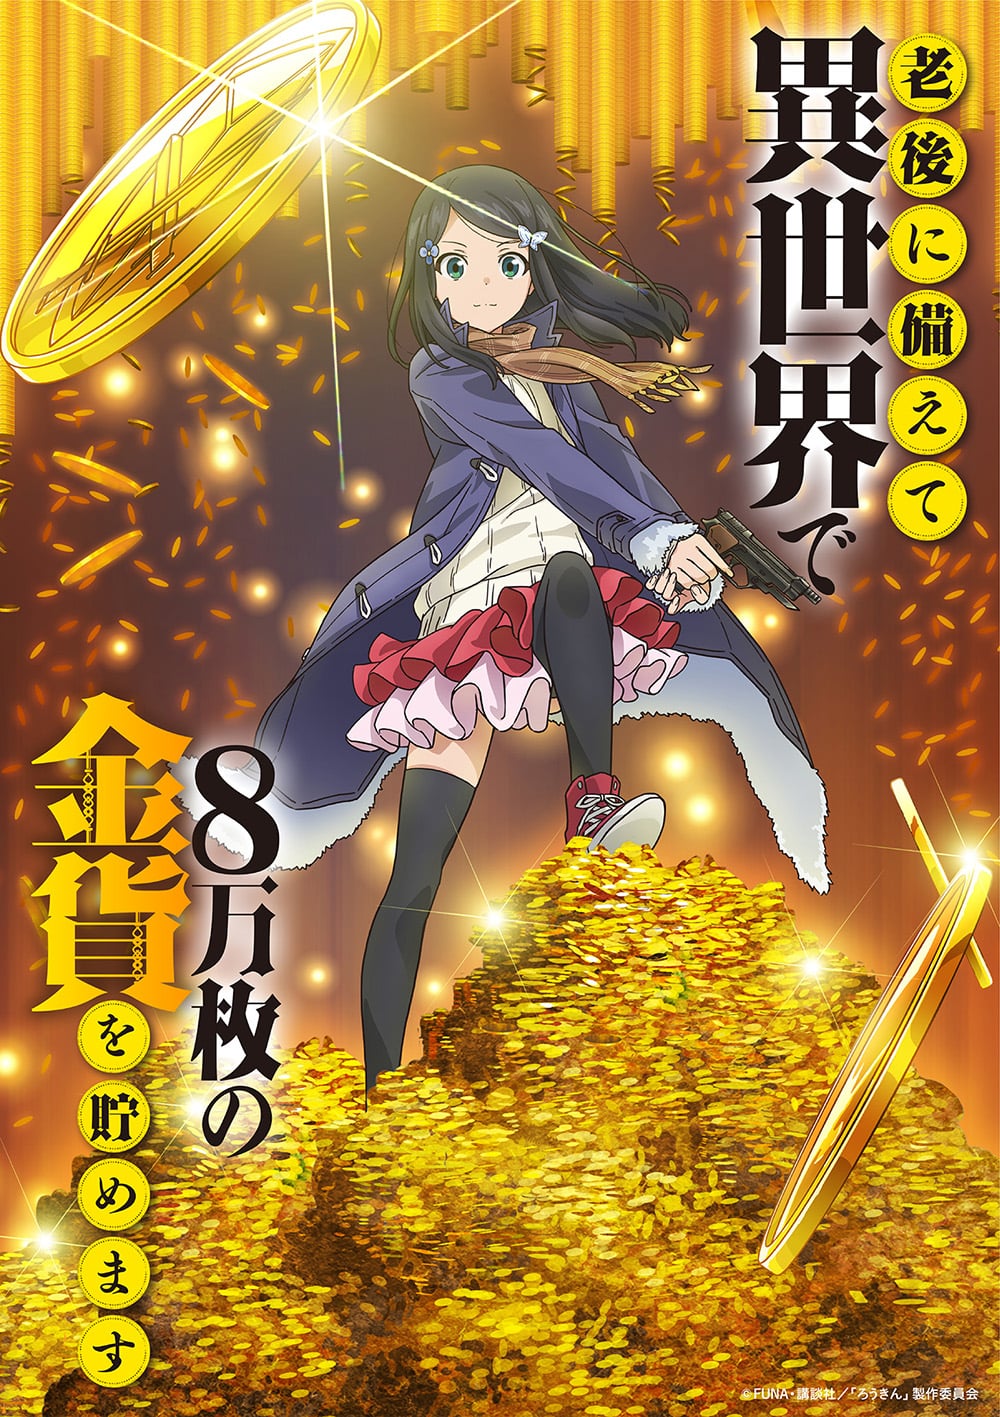 GOLD ISEKAI SHOUKAN WA NIDOME DESU Type: Fall 2020 Anime Plot Summary:  There was once a